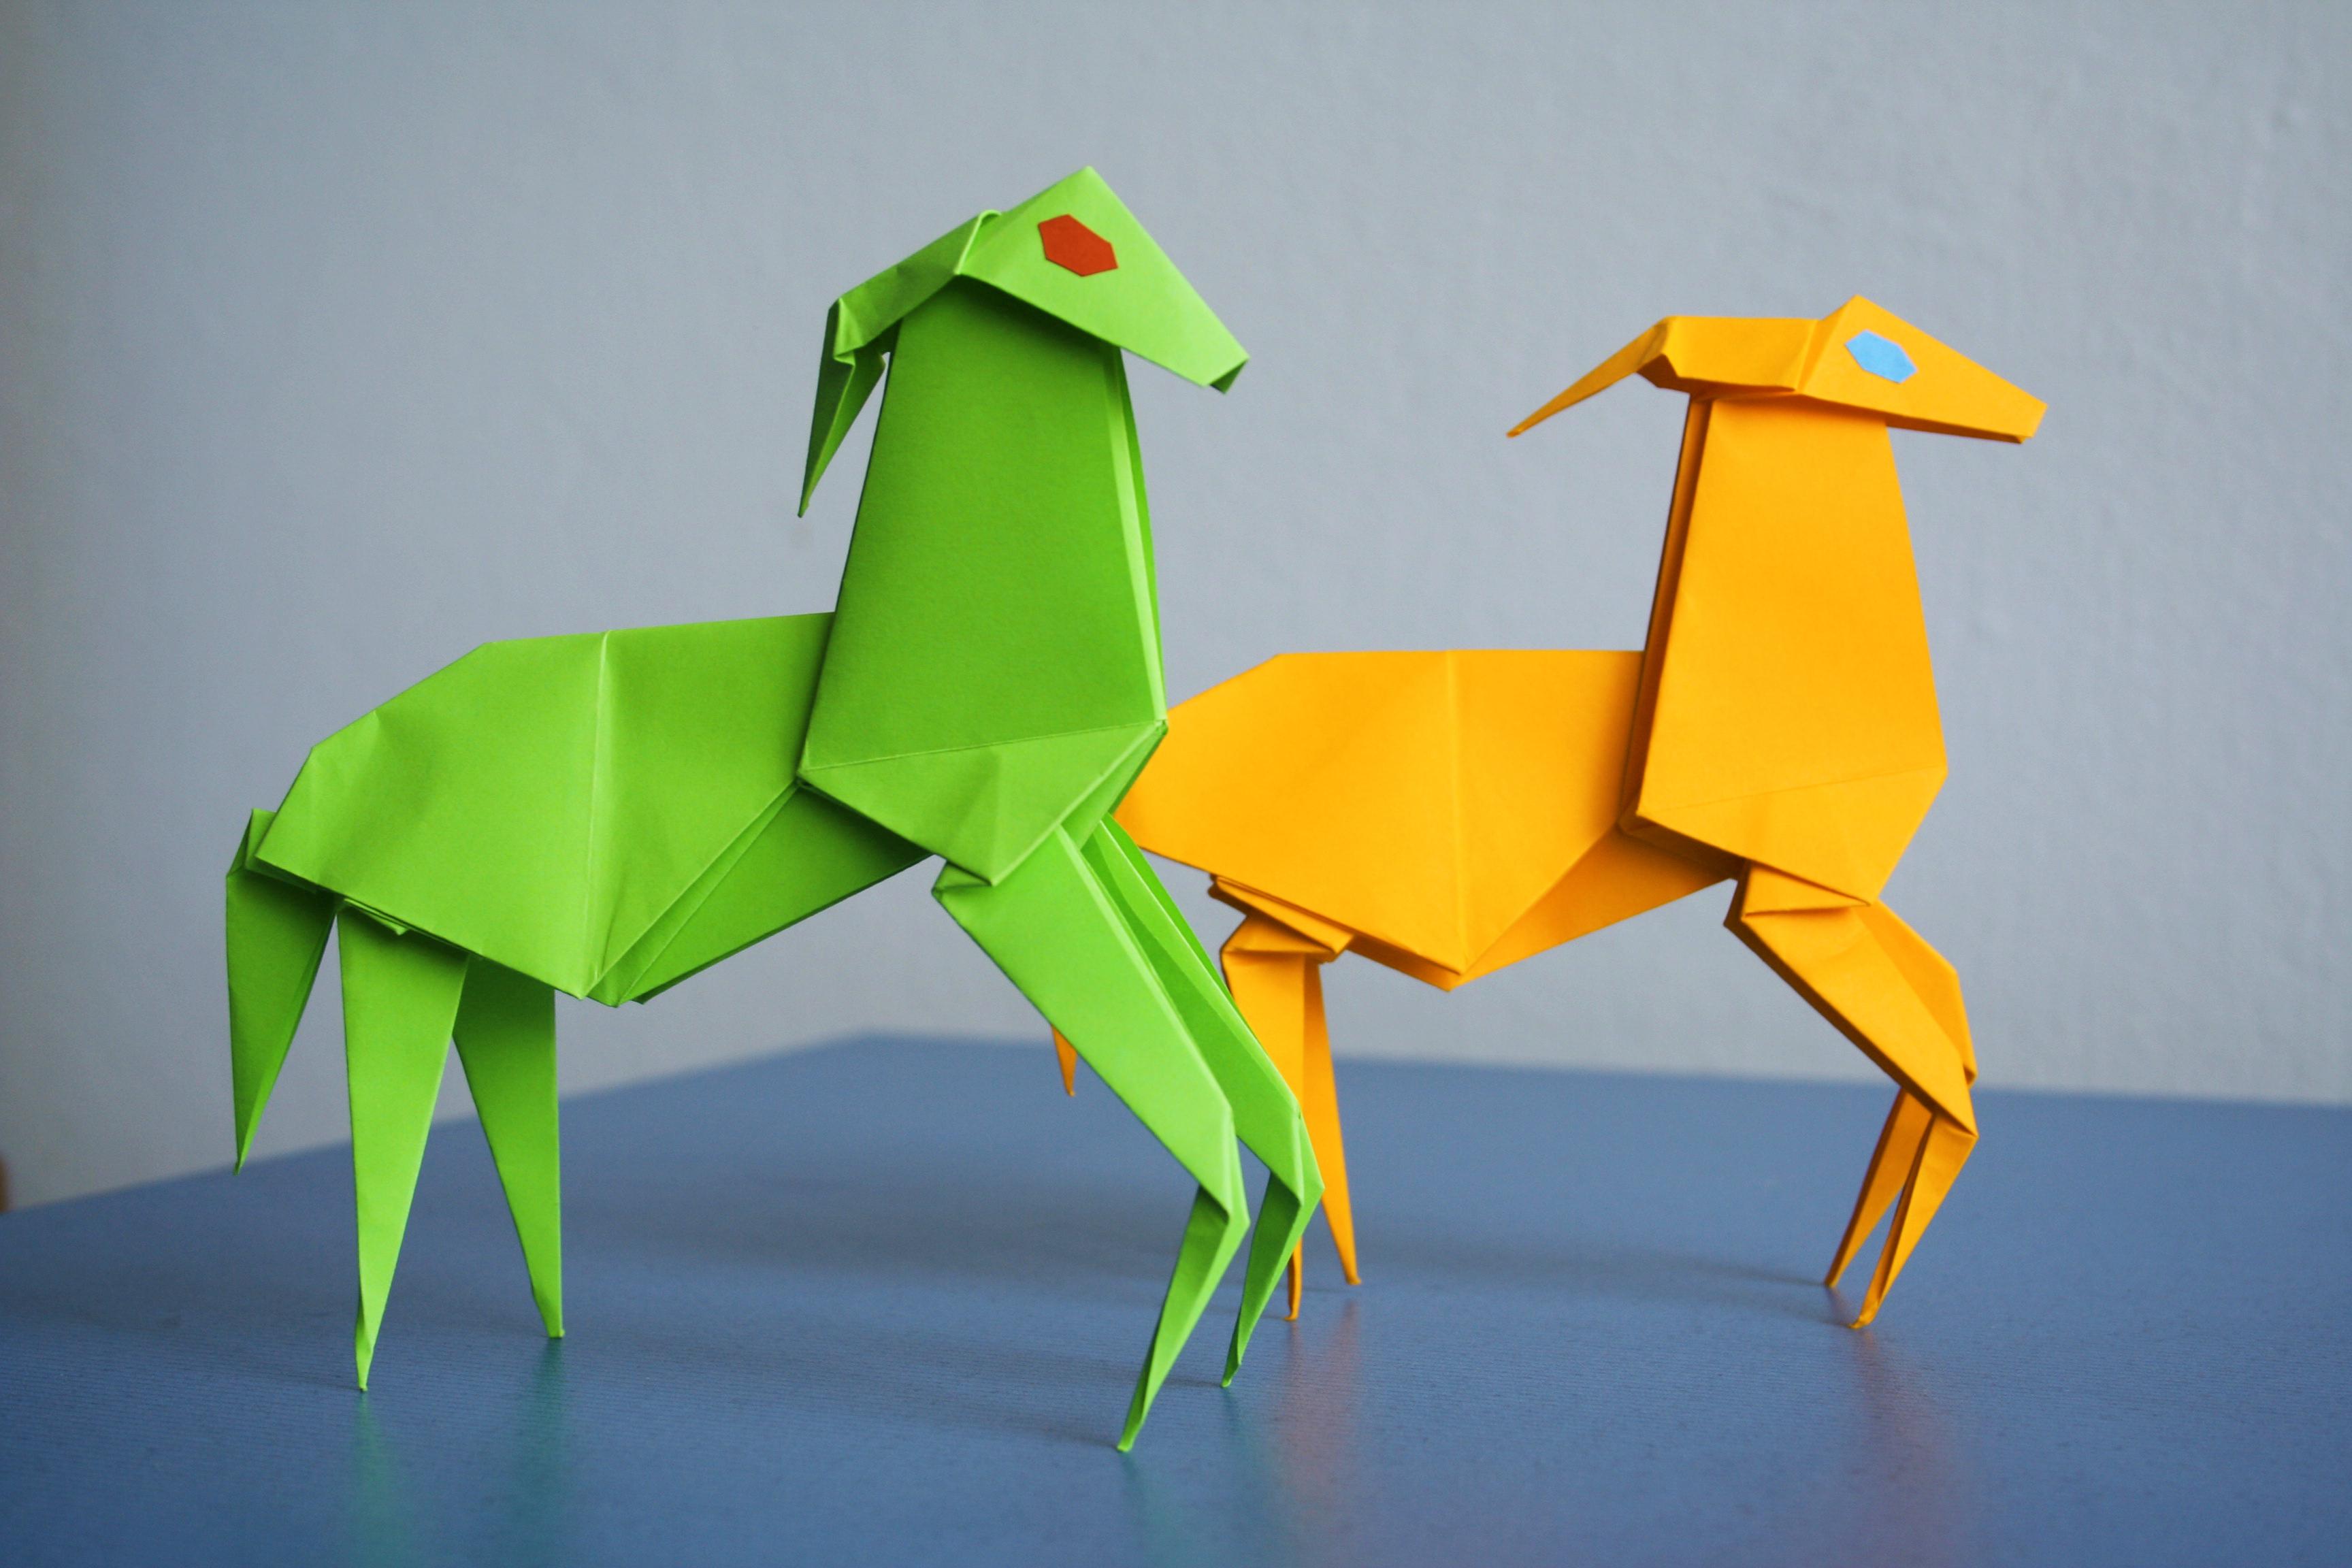 http://www.freakingnews.com/images/app_images/origami.jpg